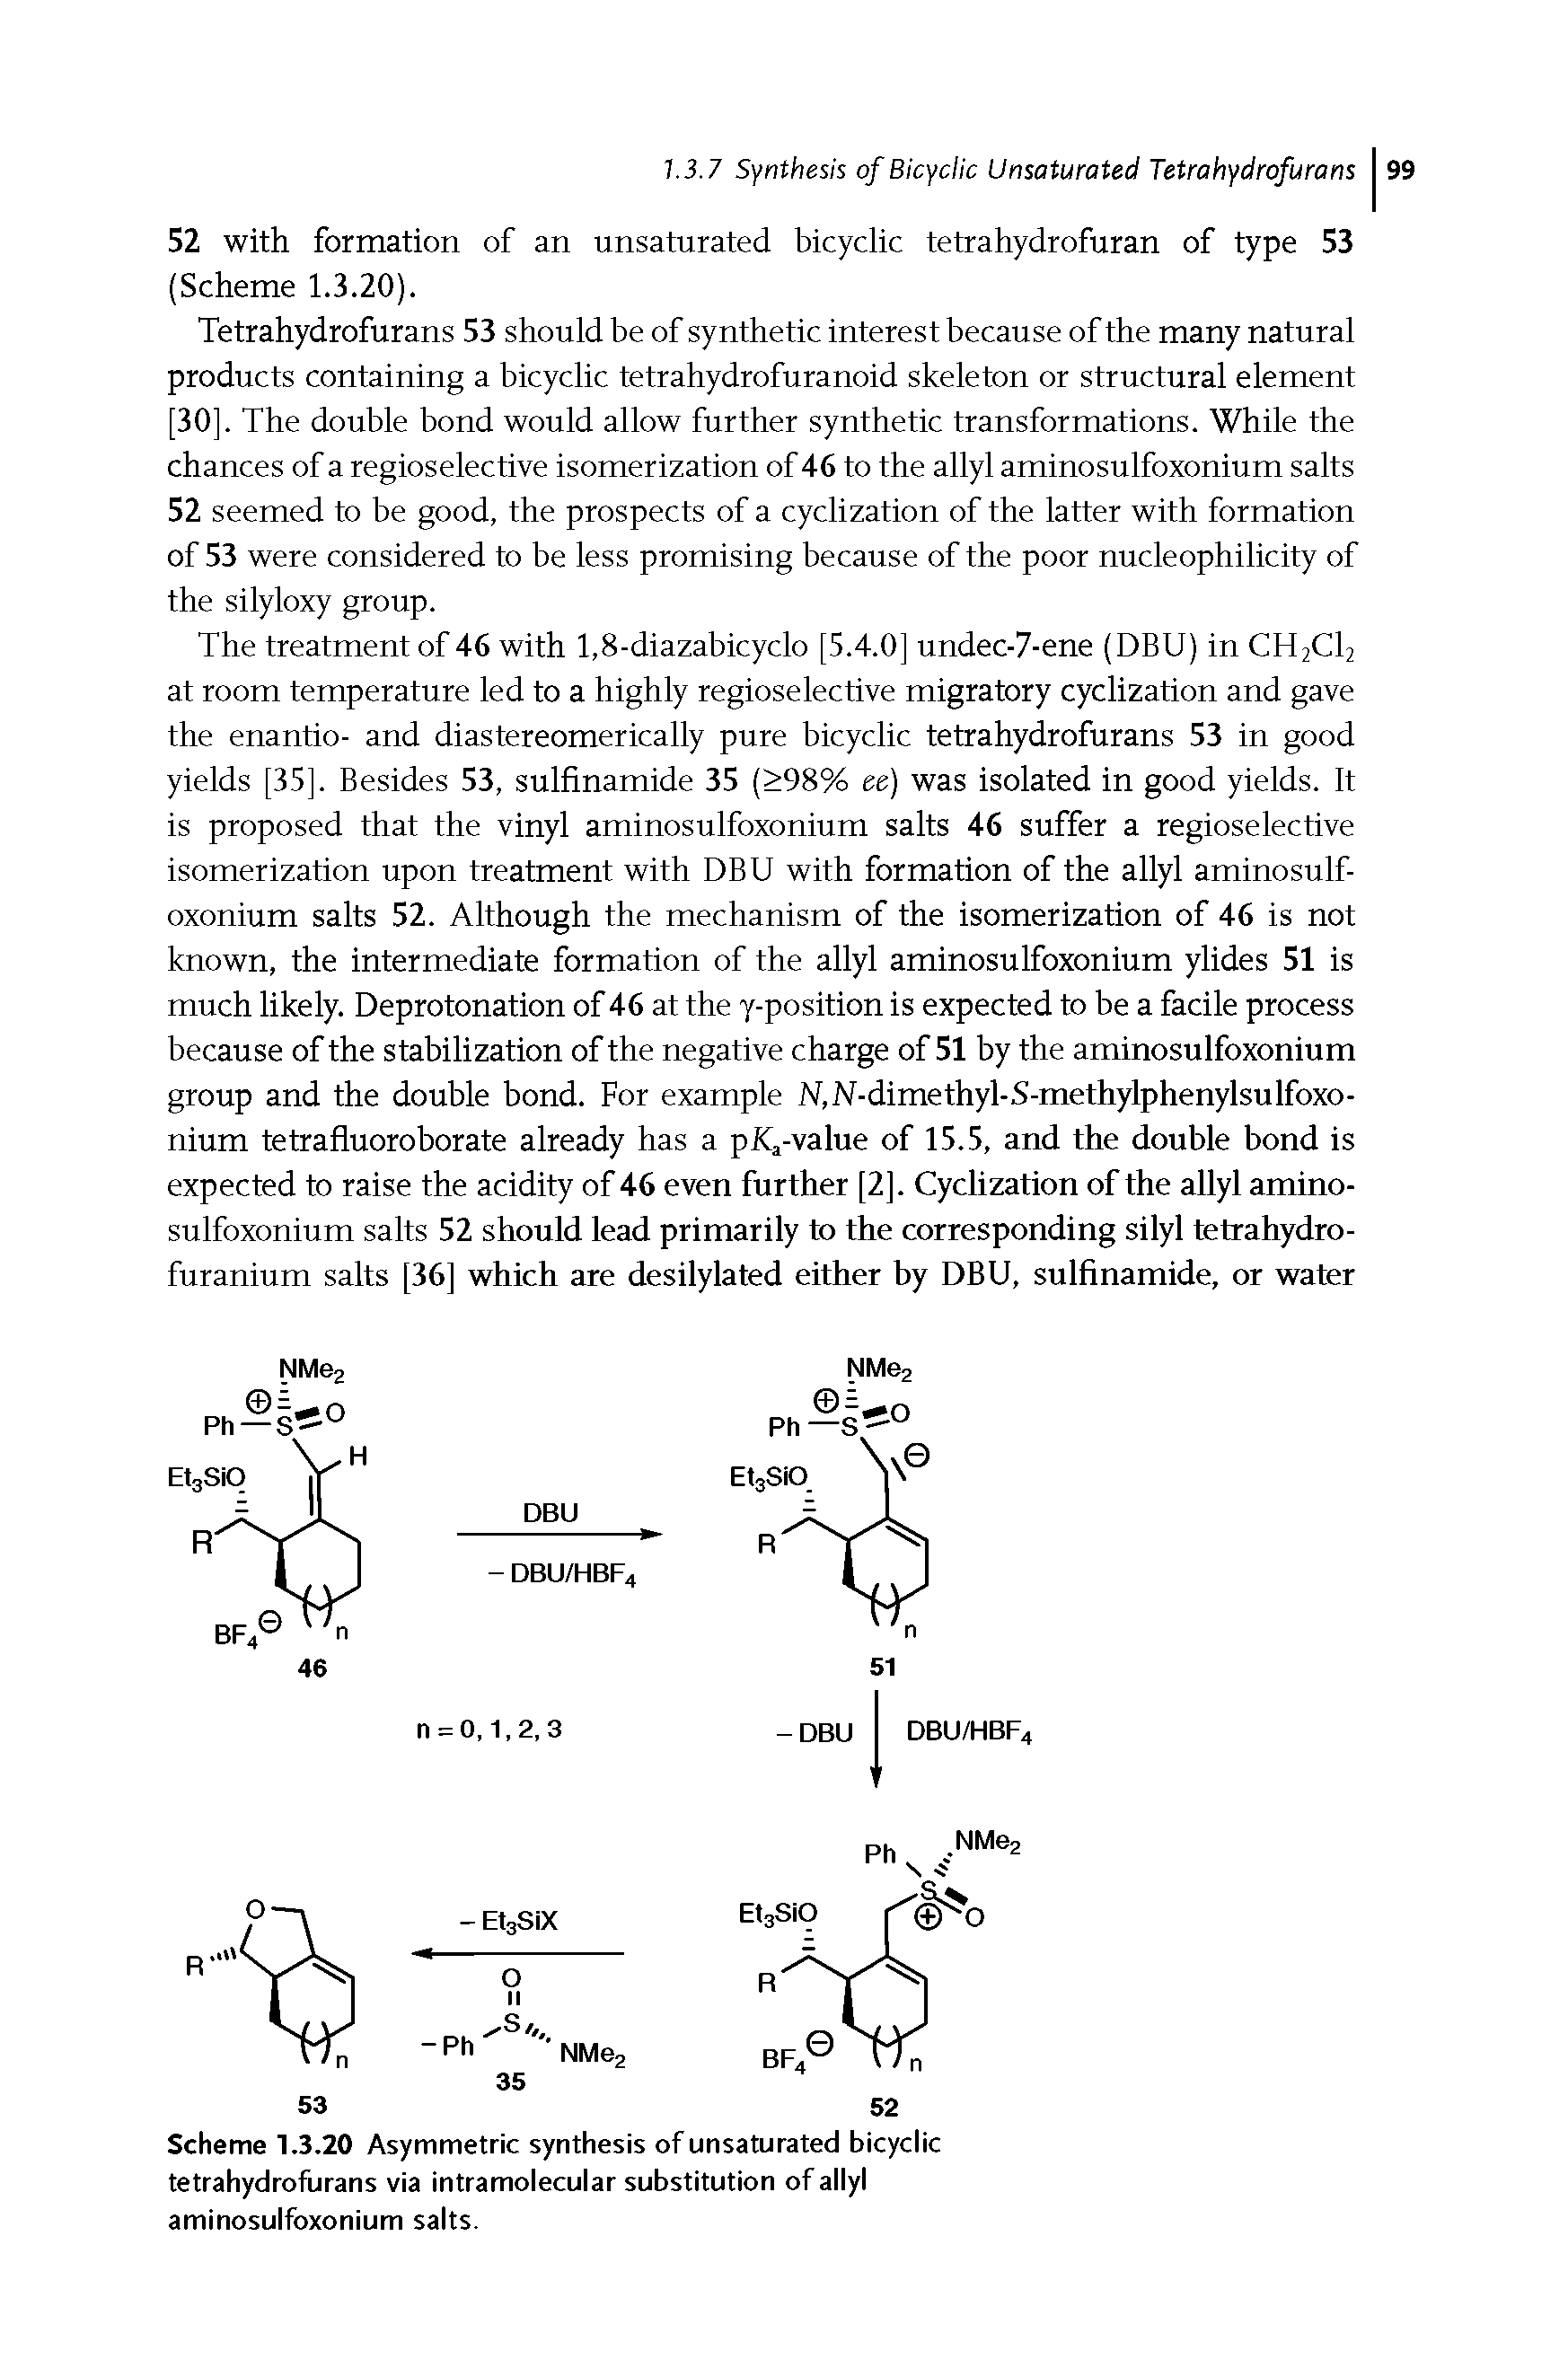 Scheme 1.3.20 Asymmetric synthesis of unsaturated bicyclic tetrahydrofurans via intramolecular substitution of allyl aminosulfoxonium salts.